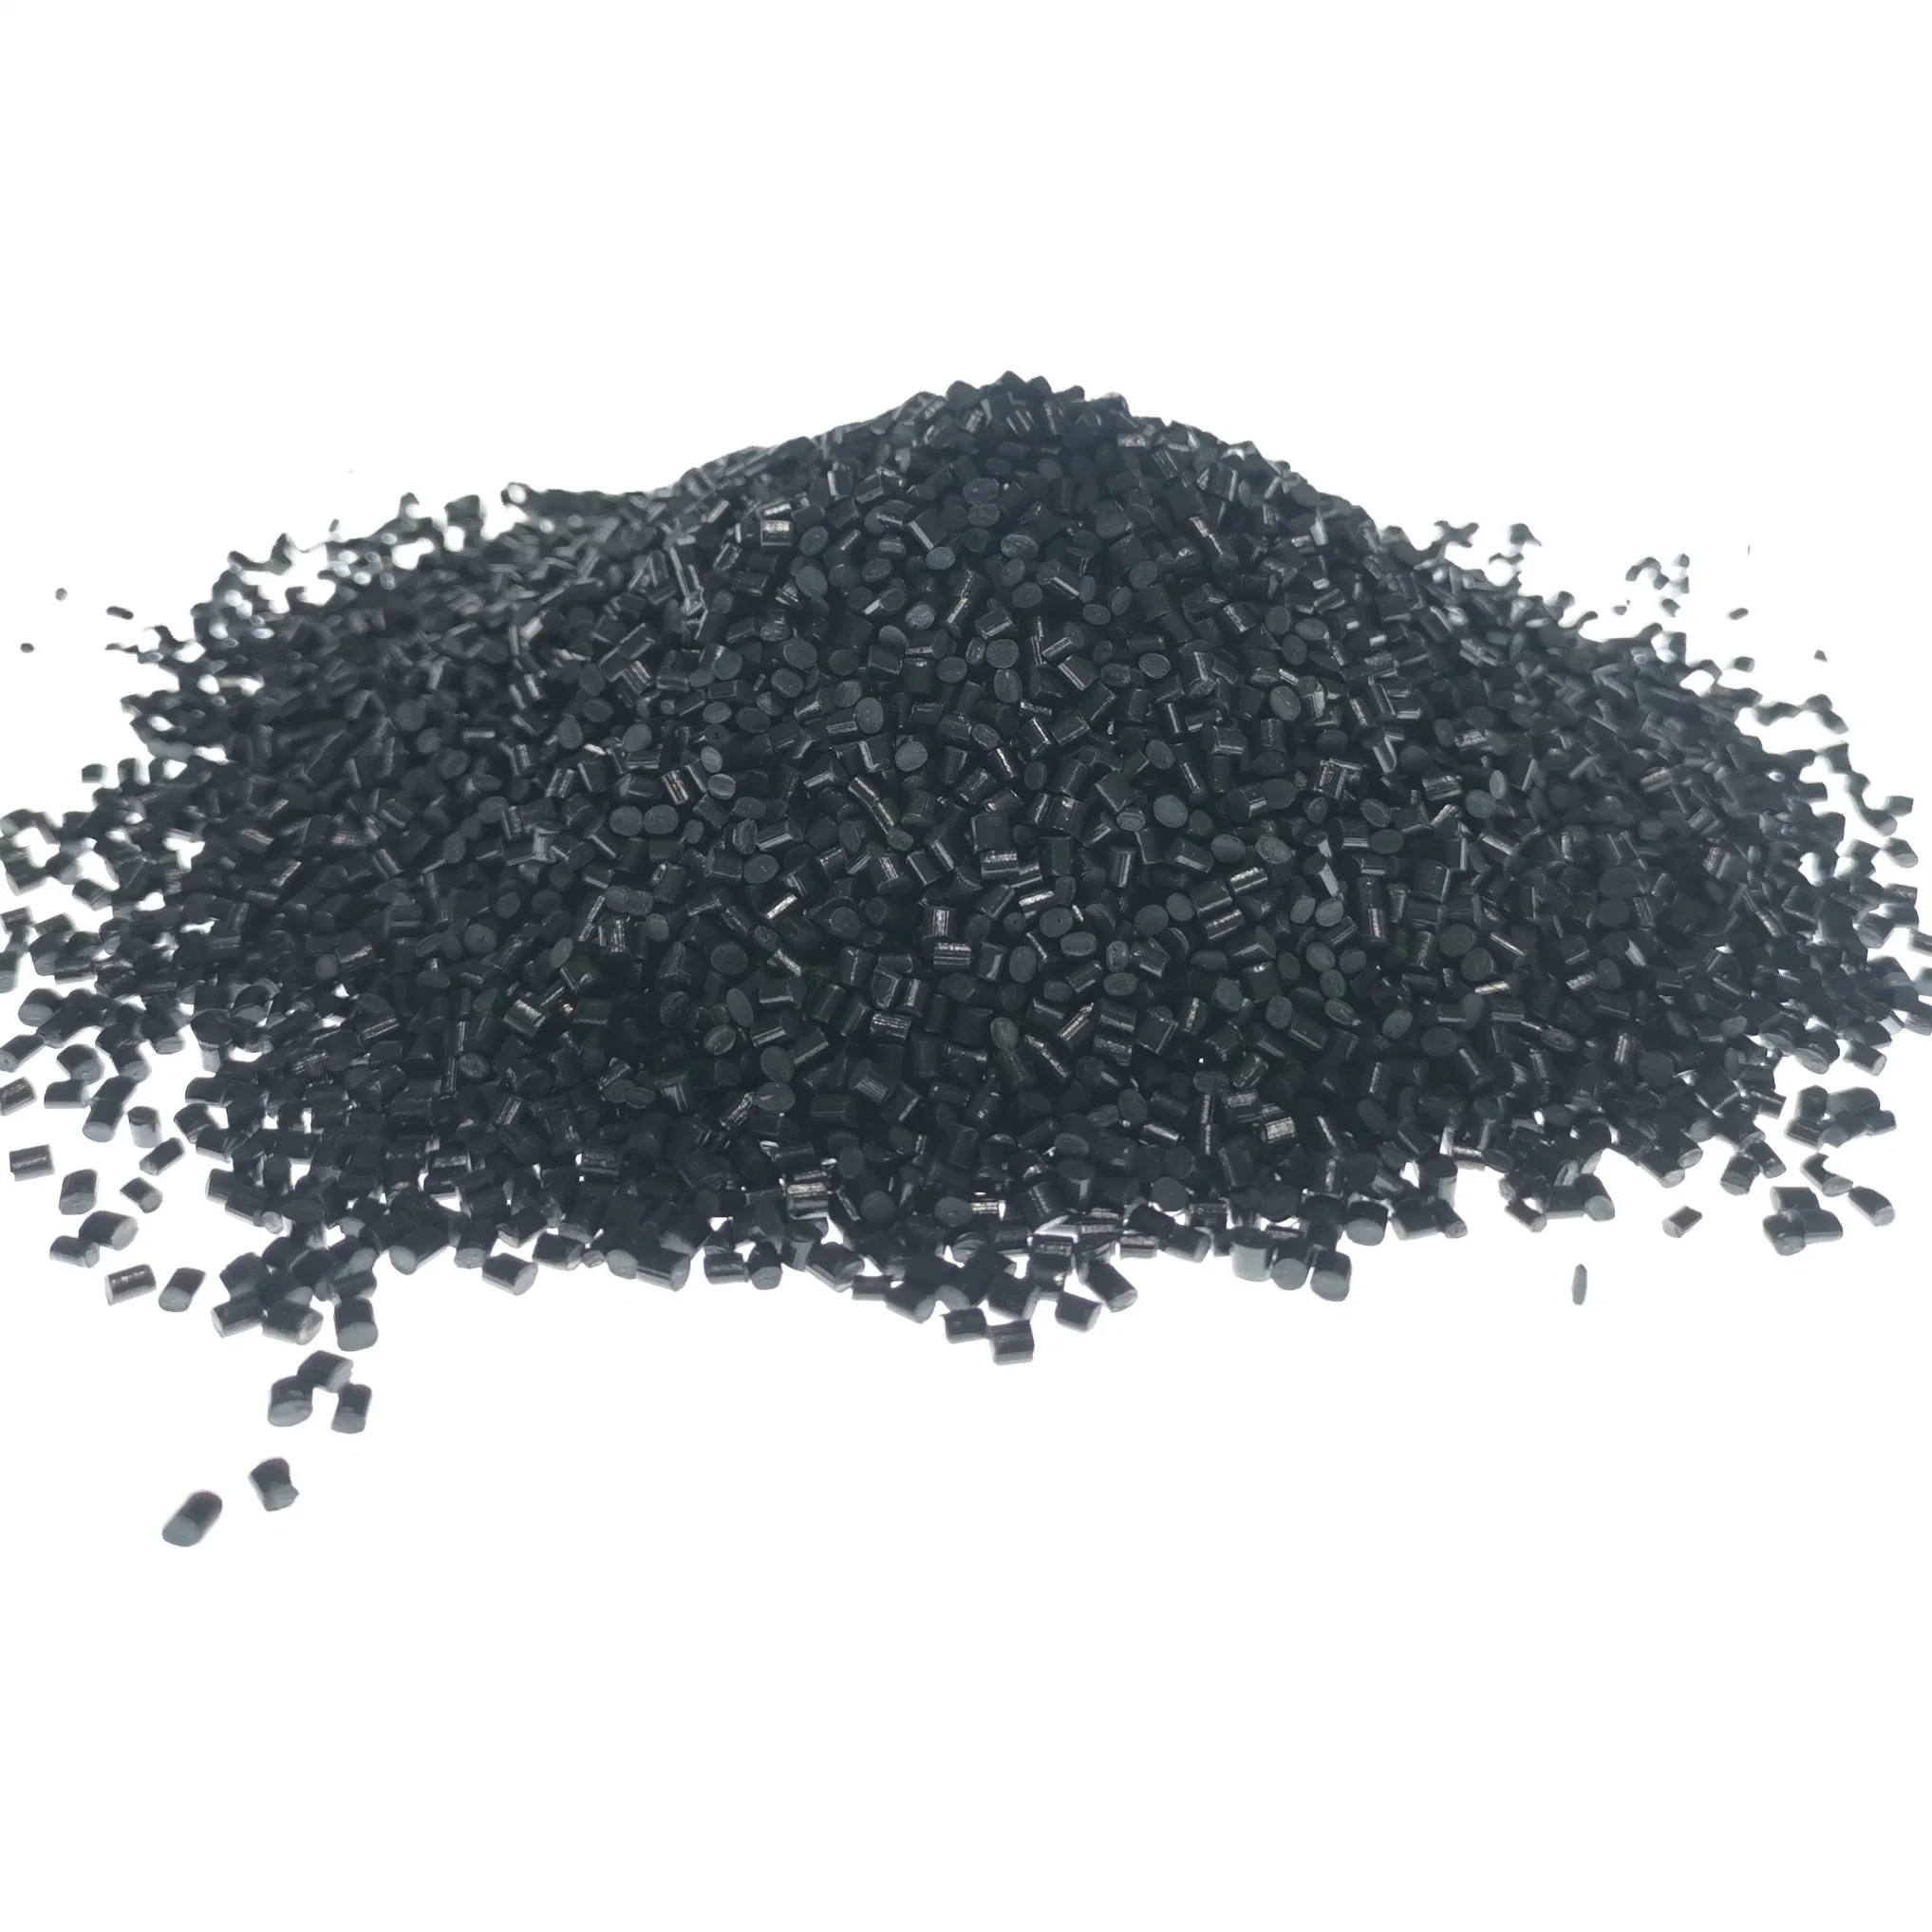 Virgin Black Polypropylene Random Copolymer PPR Resin PP Random Copolymer Granules